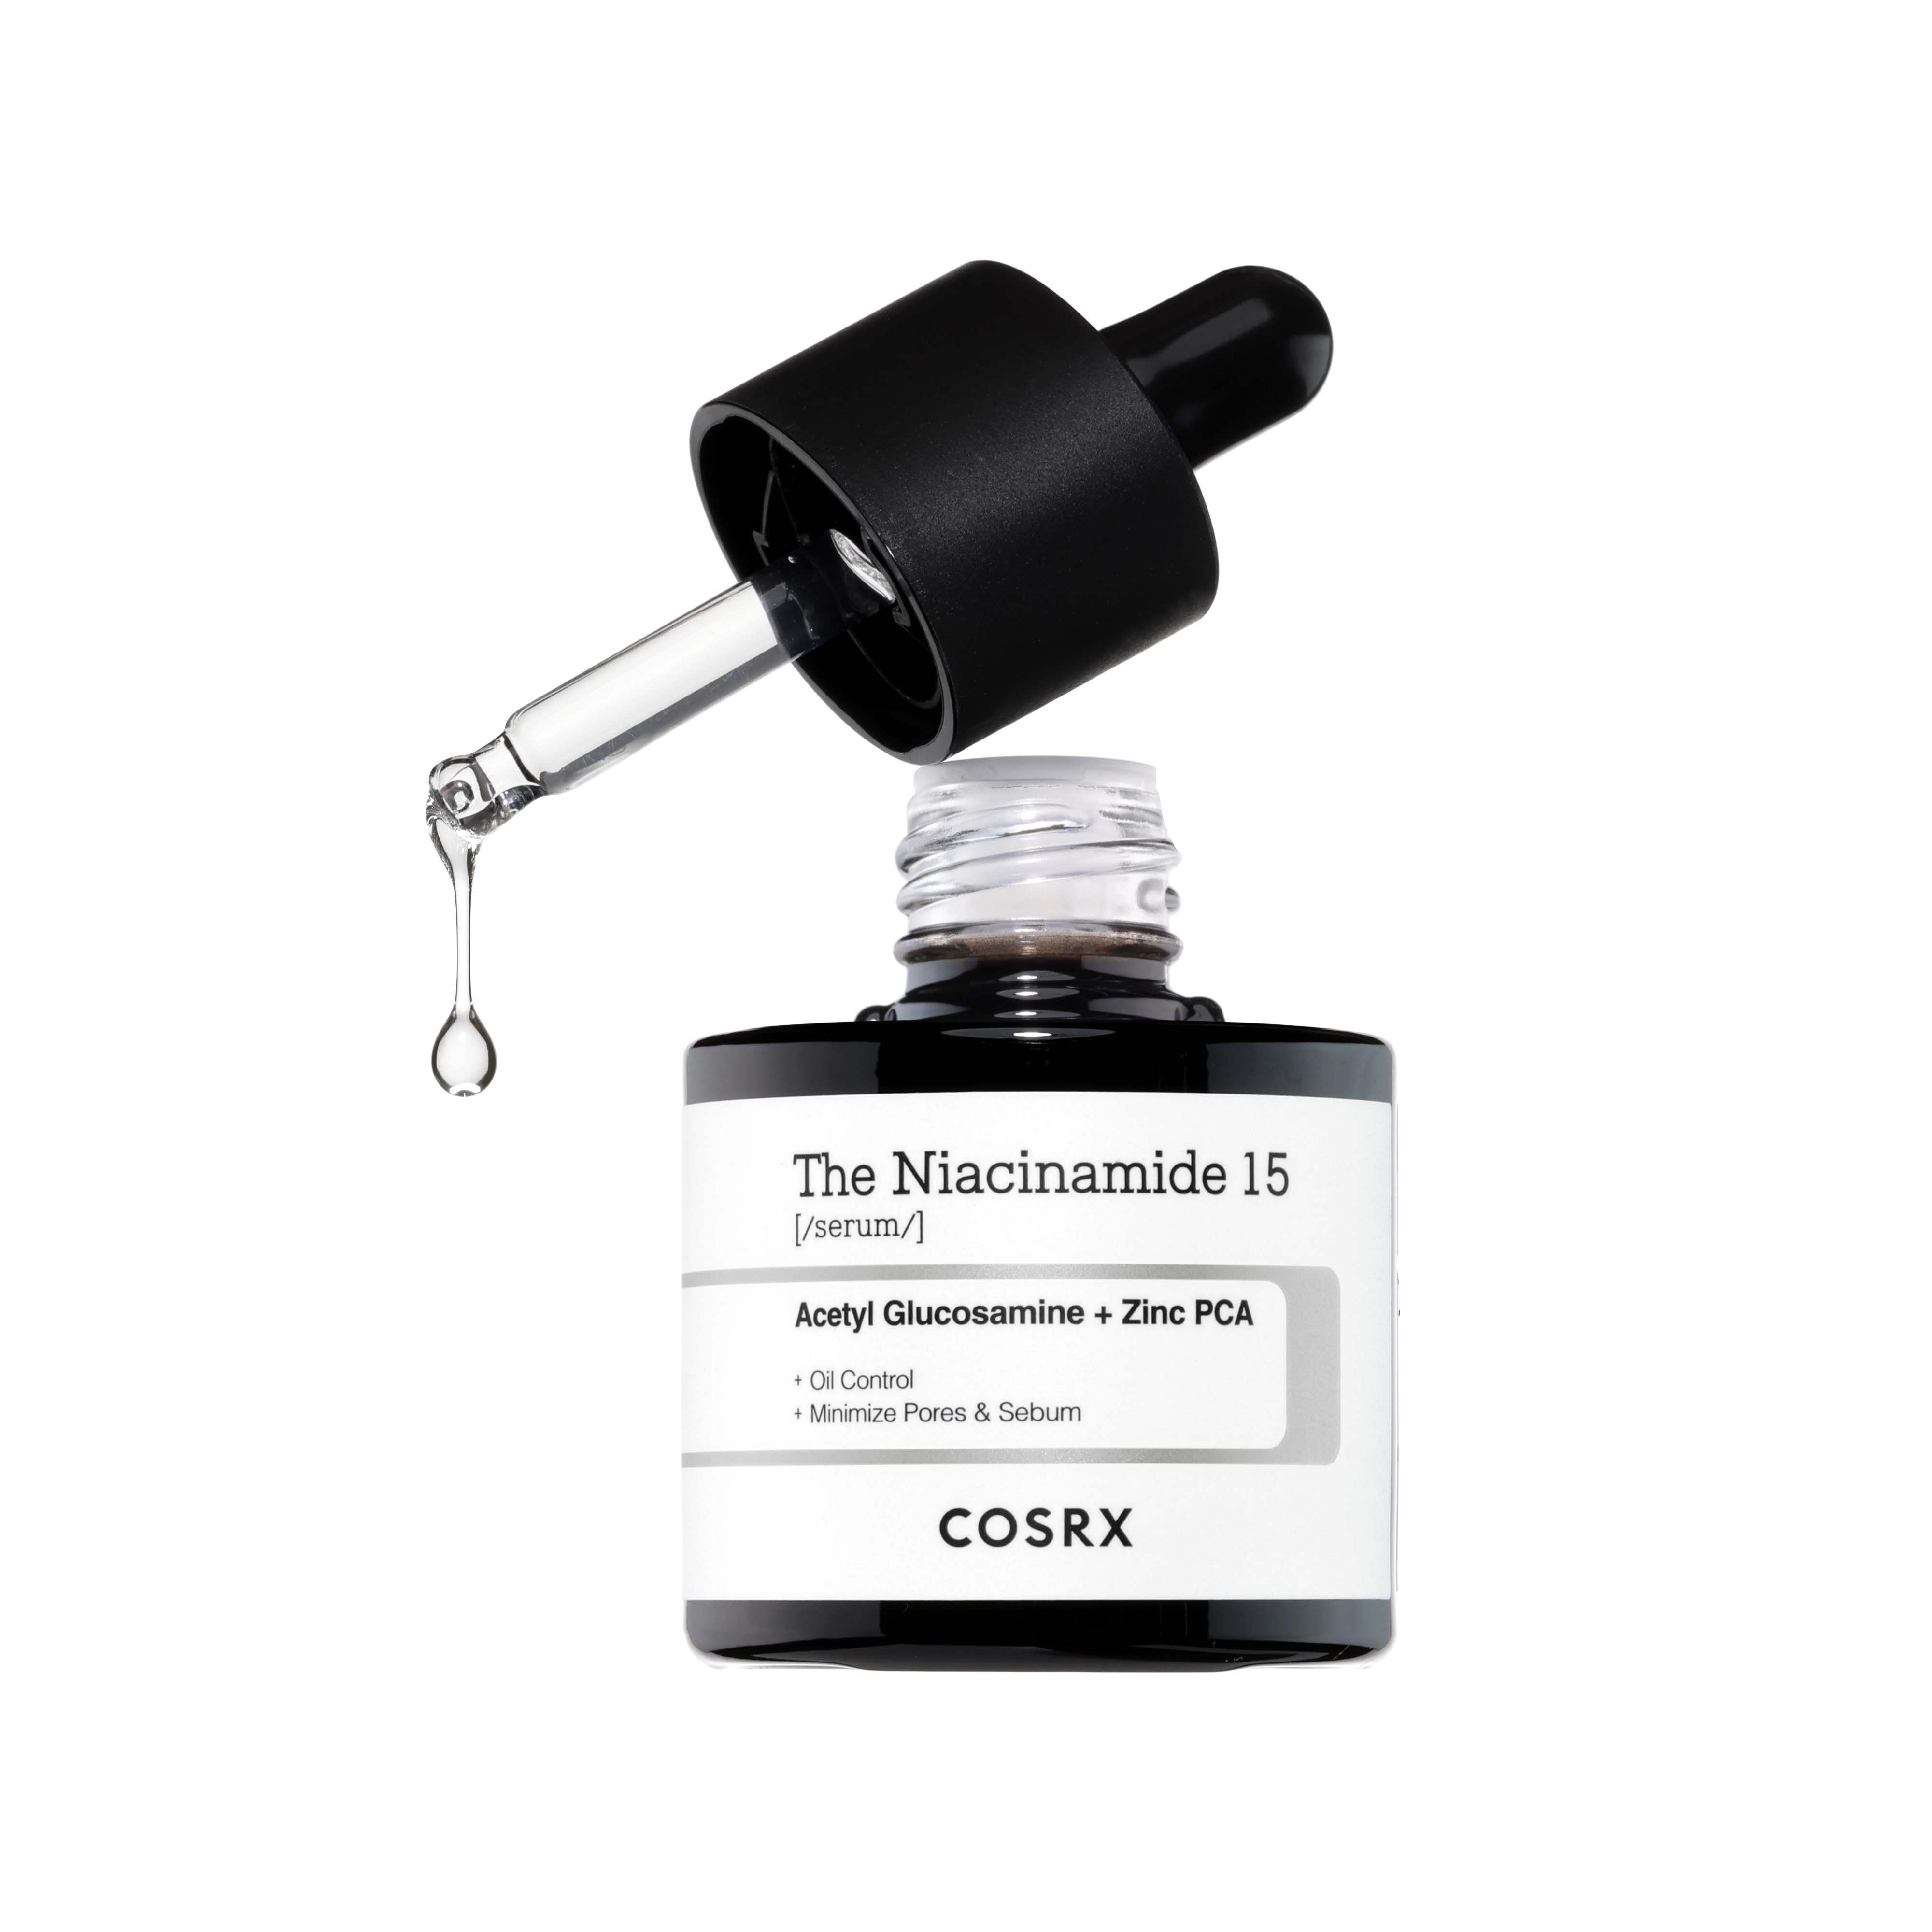 Cosrx The Niacinamide 15 Serum Beauty Cosrx   